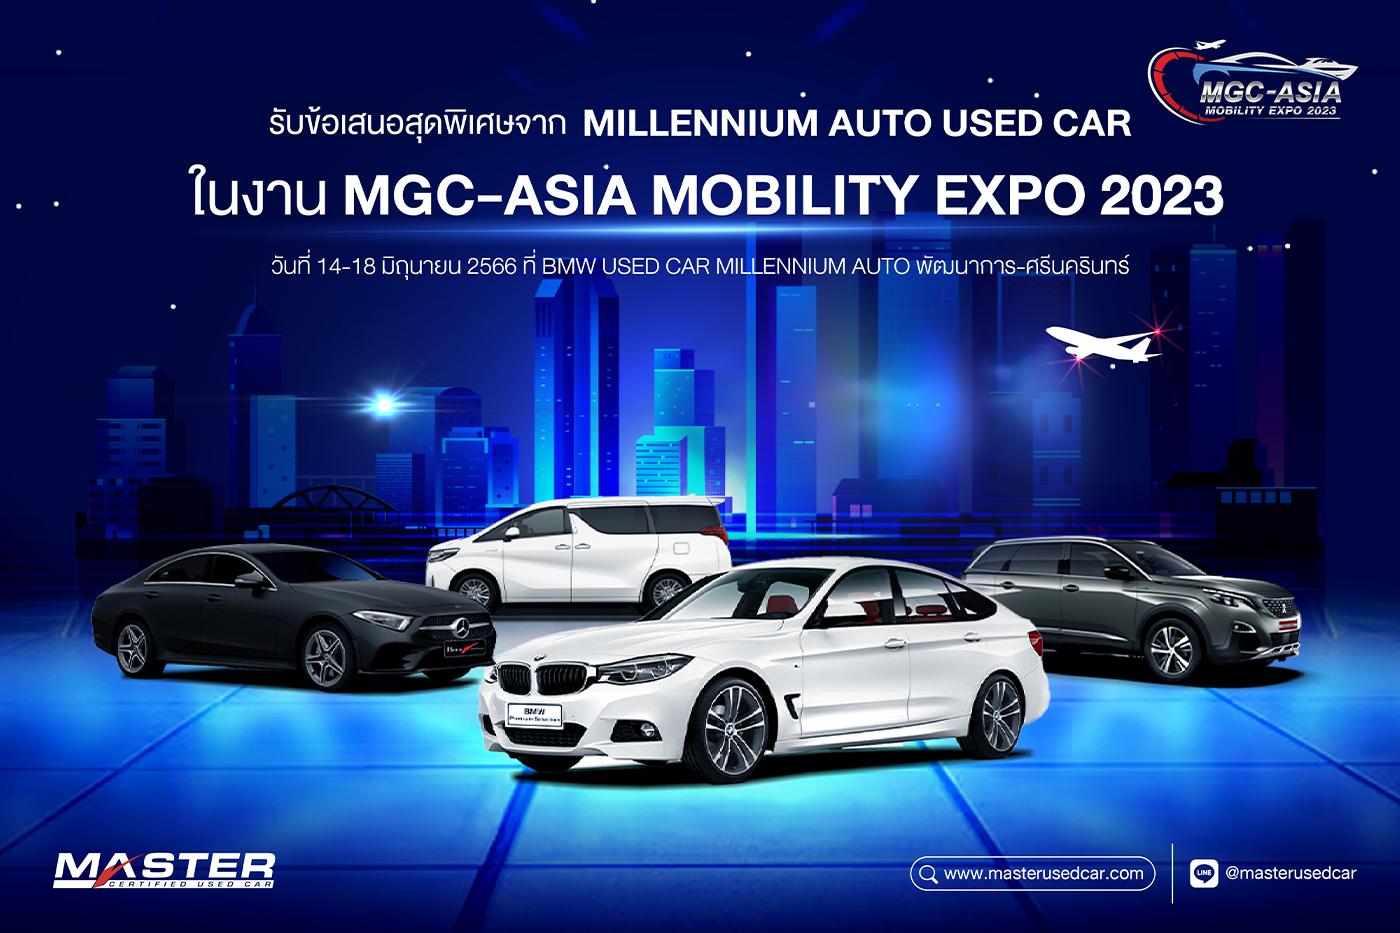 Millennium Auto Used Car จัดเต็ม! แลกรับเครดิตเงินคืน สุดคุ้ม! ในงาน MGC-ASIA Mobility Expo 2023